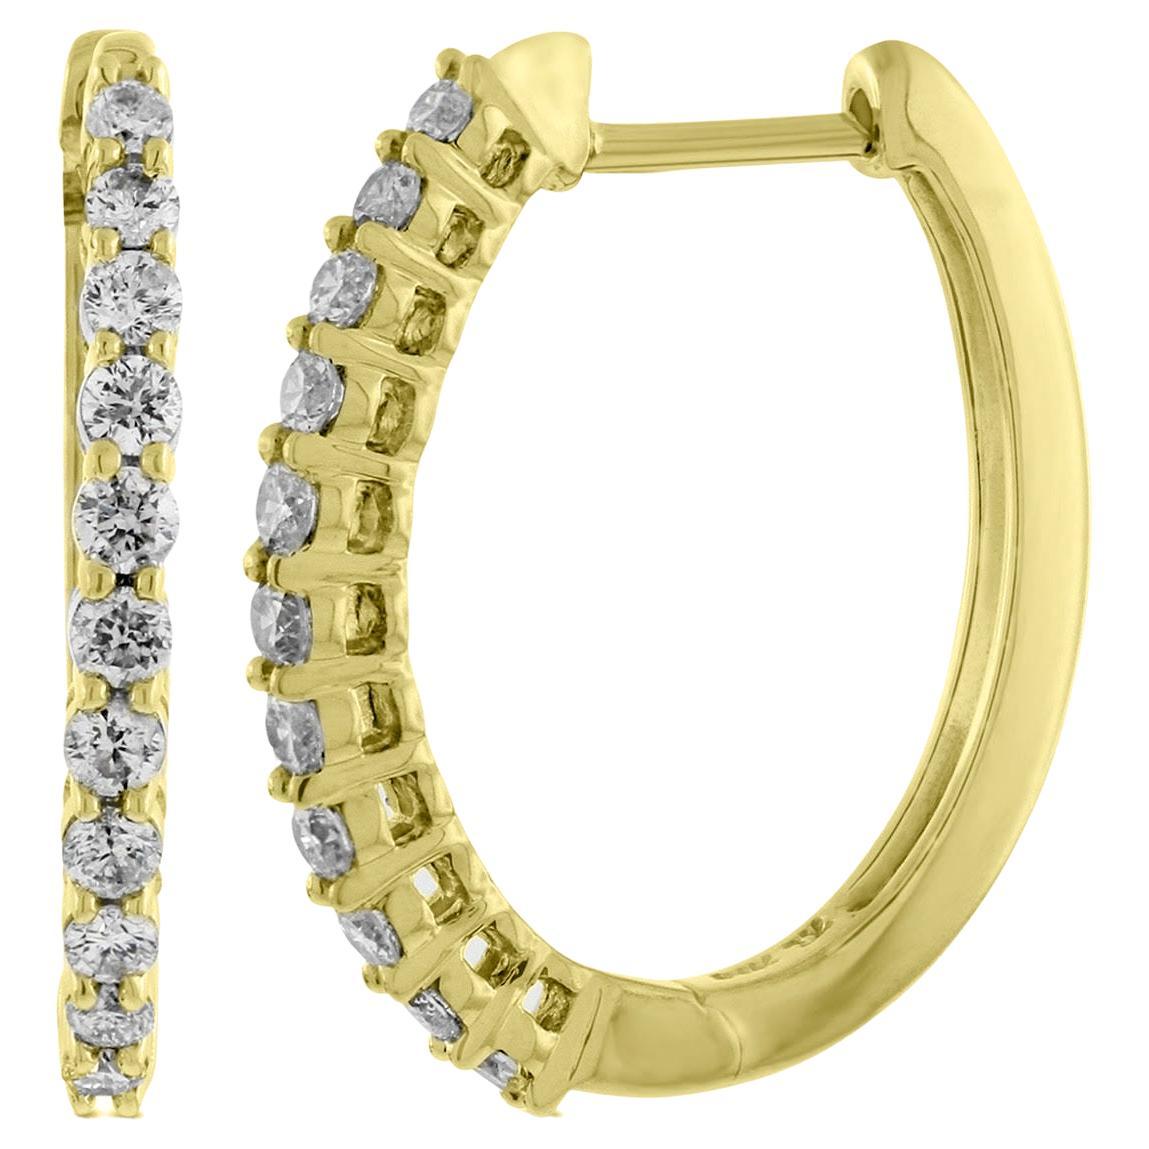 1.00 Carat Total Weight Diamond Outside Oval Hoop Earrings in 14K Yellow Gold